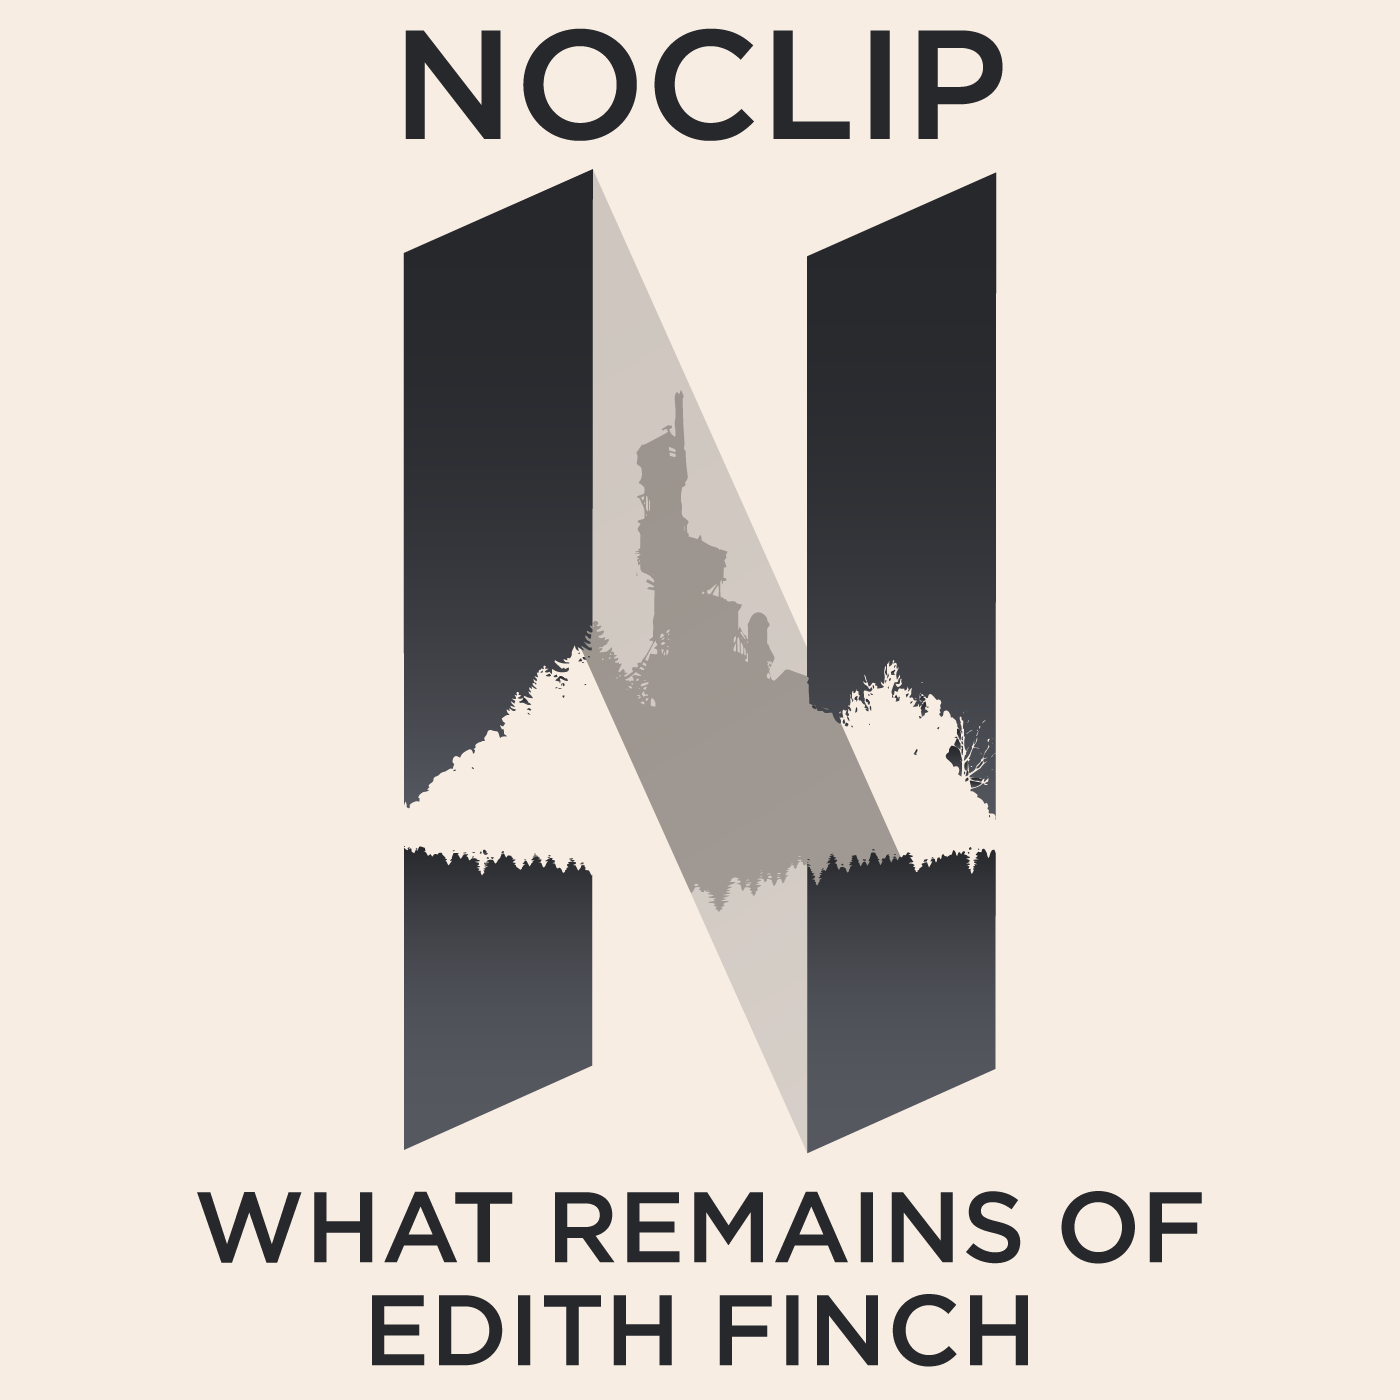 Noclip - Wikipedia